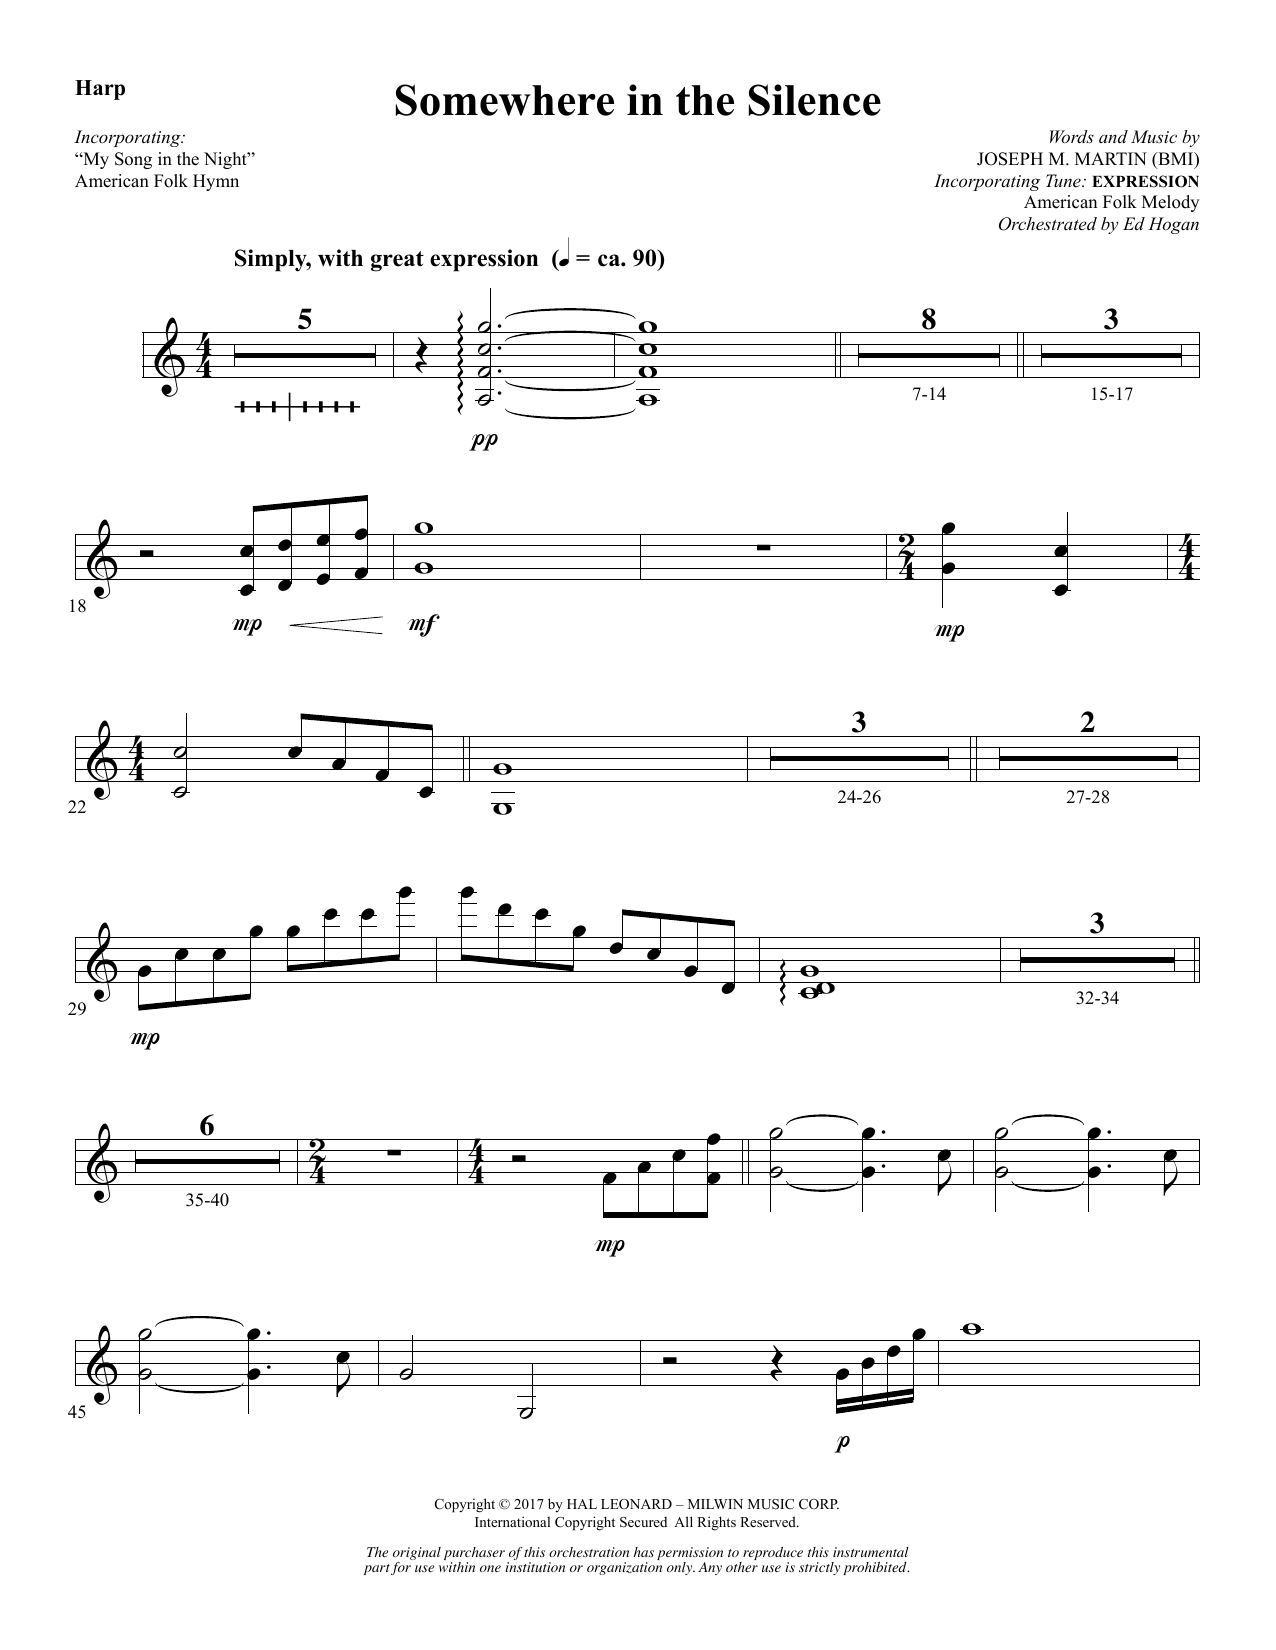 Download Joseph M. Martin Somewhere in the Silence - Harp Sheet Music